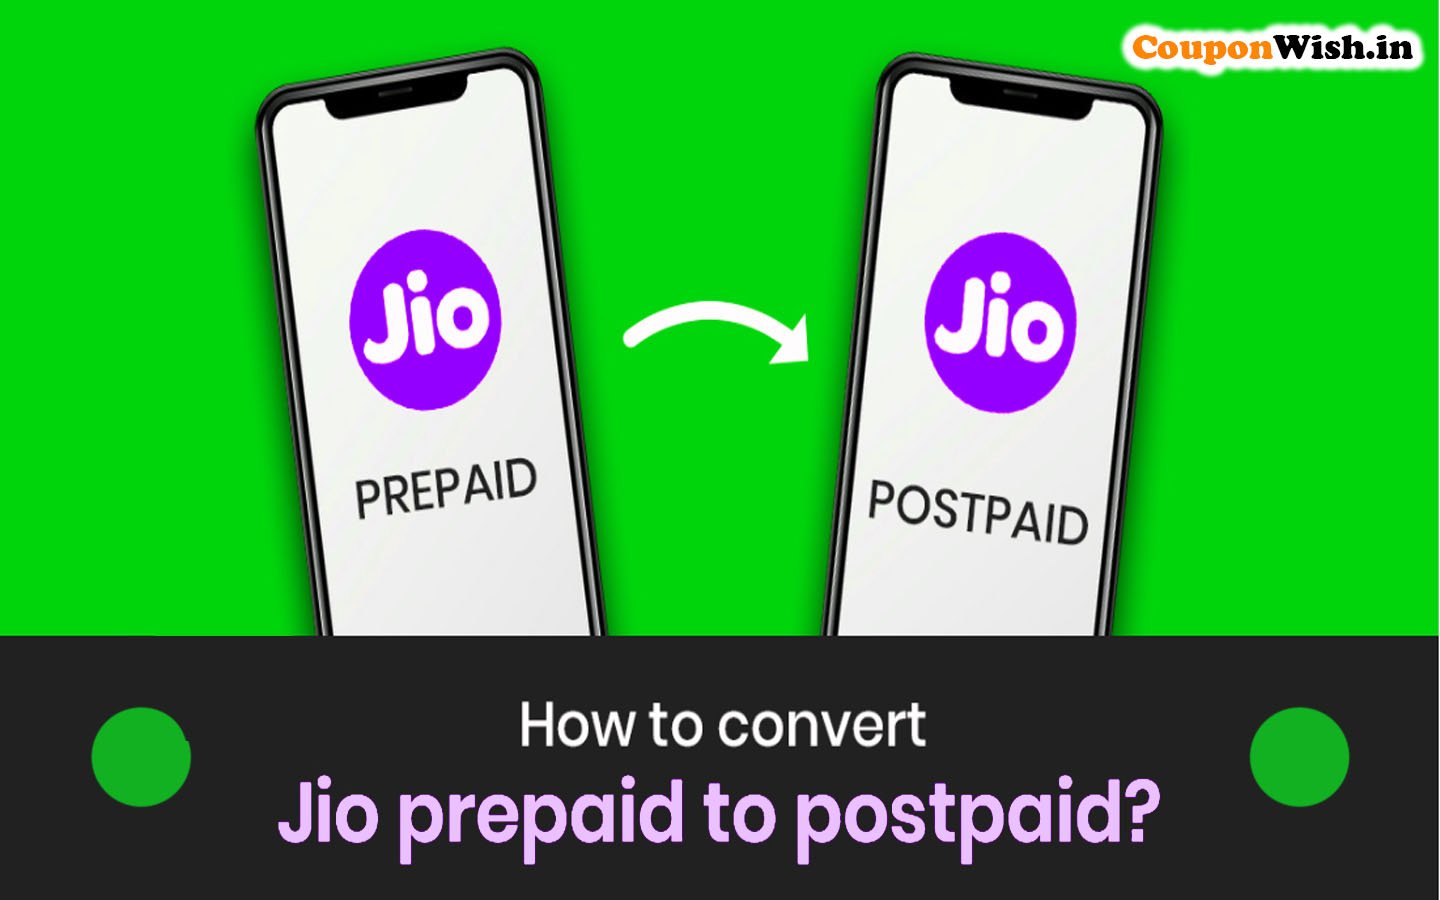 How to Convert Jio Prepaid to Jio Postpaid Online and Vice Versa